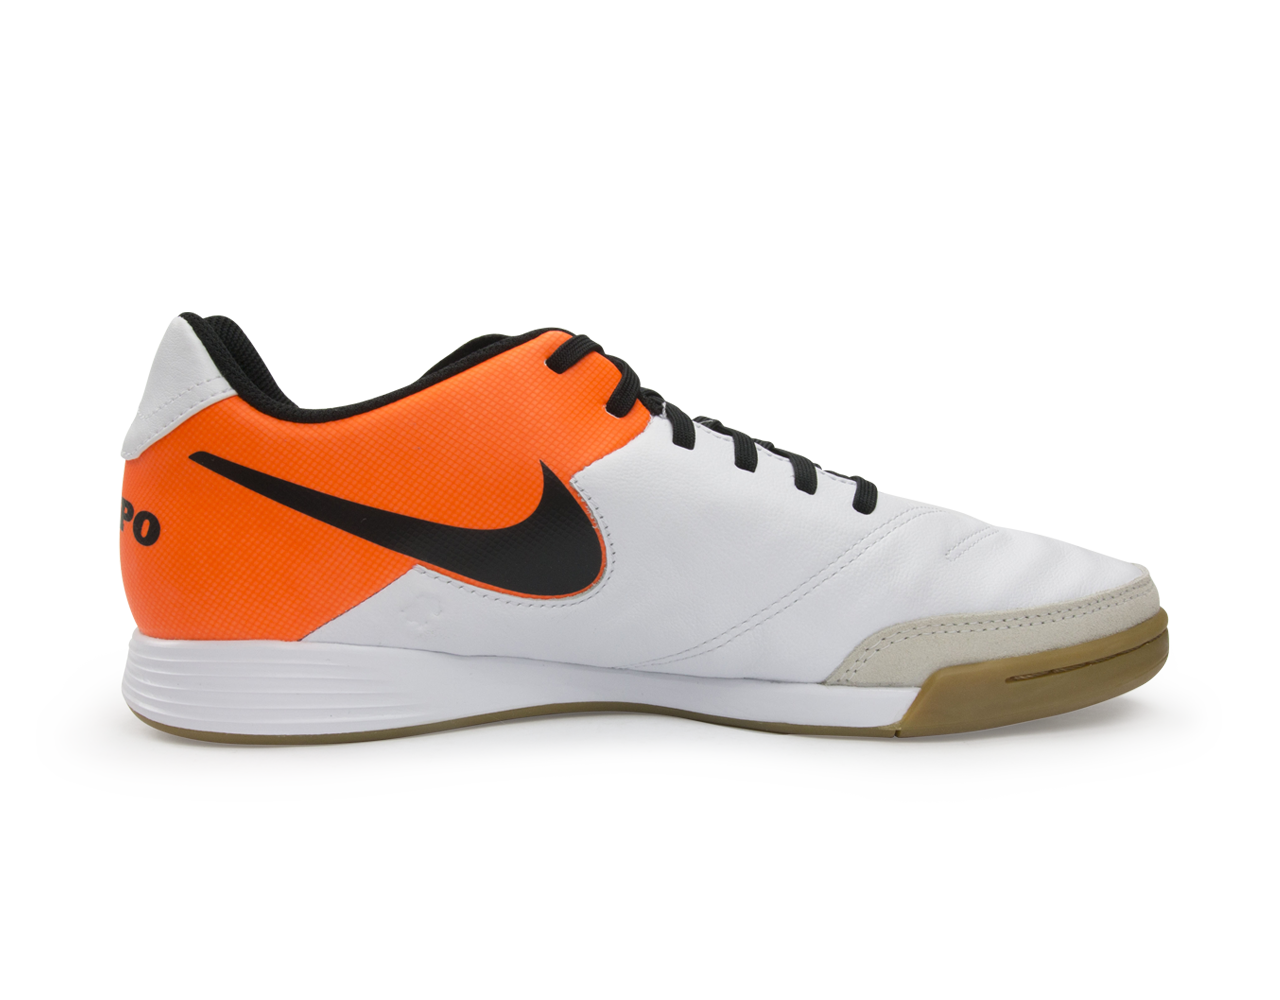 Nike Men's Tiempo Genio II Leather Indoor Soccer Shoes White/Black/Total Orange